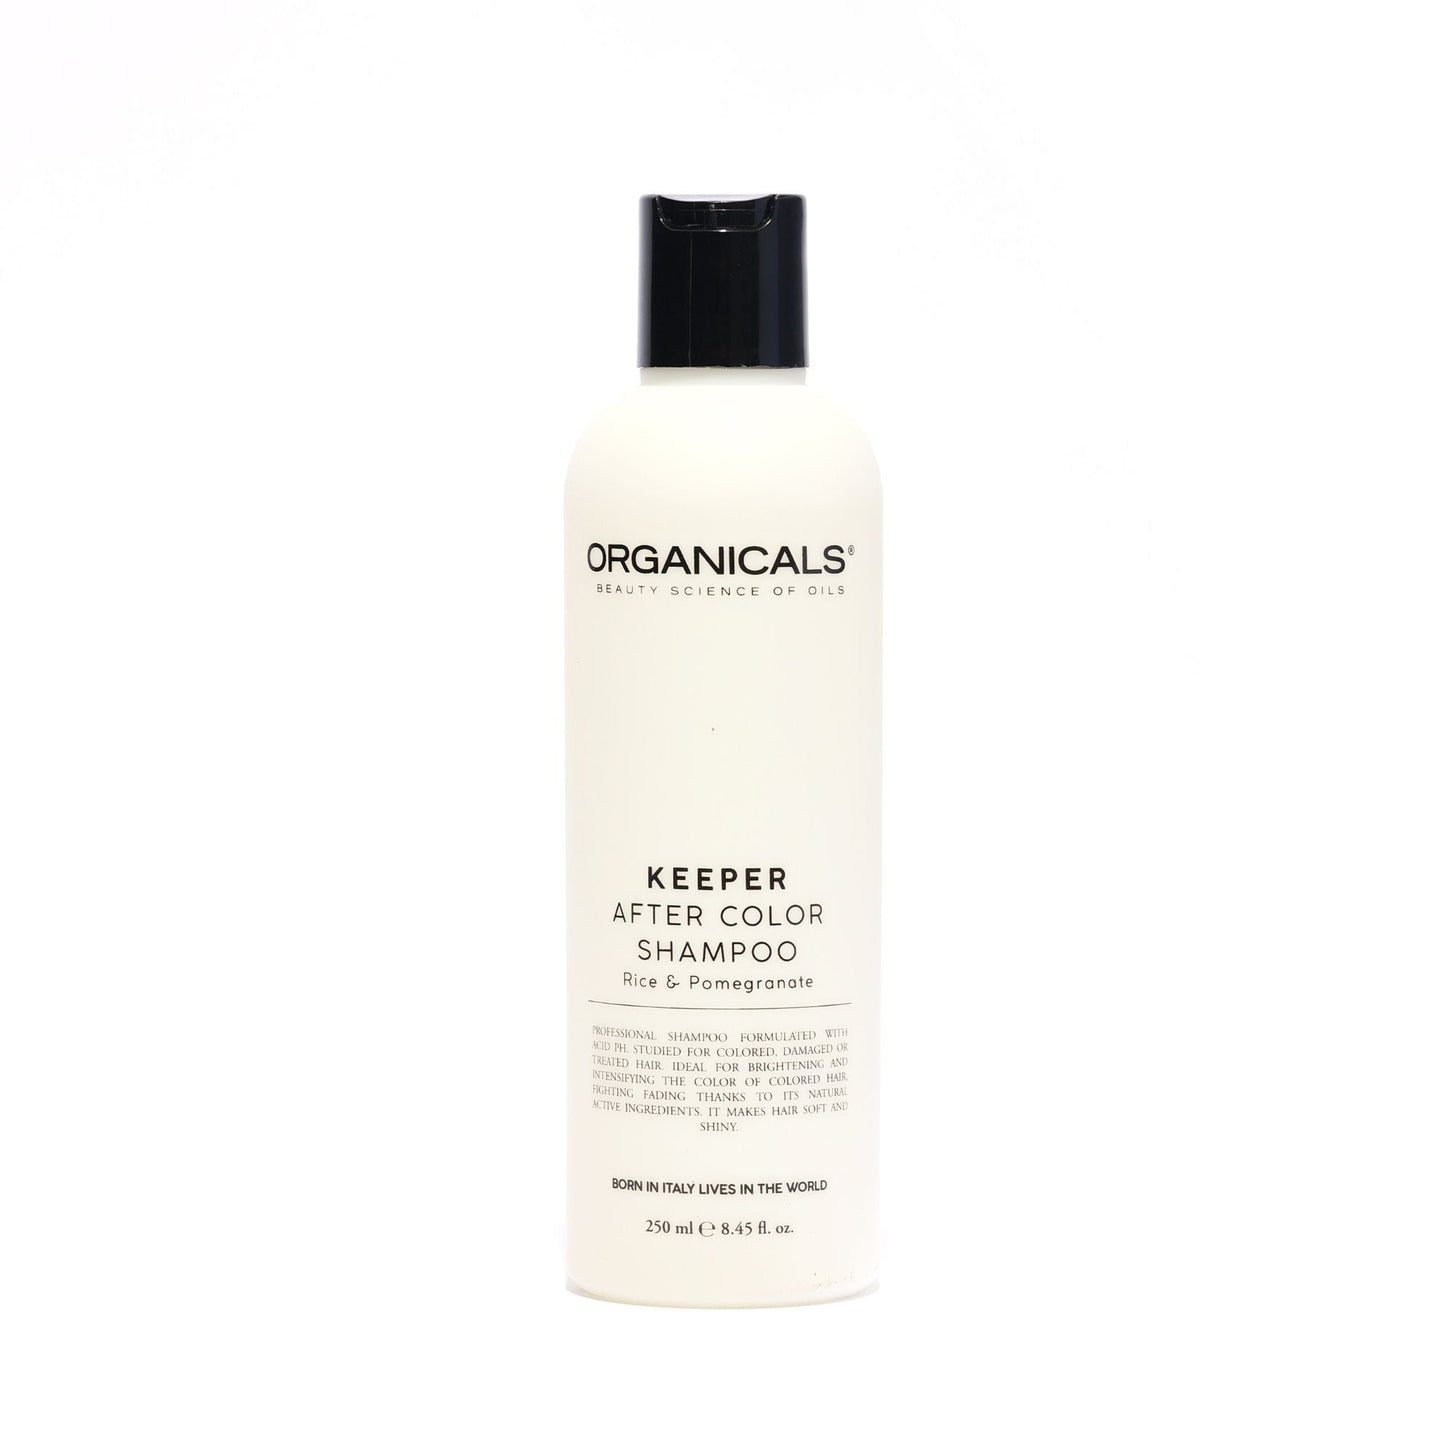 KEEPER After Color šampon za barvane lase ORGANICALS - Šamponi.si